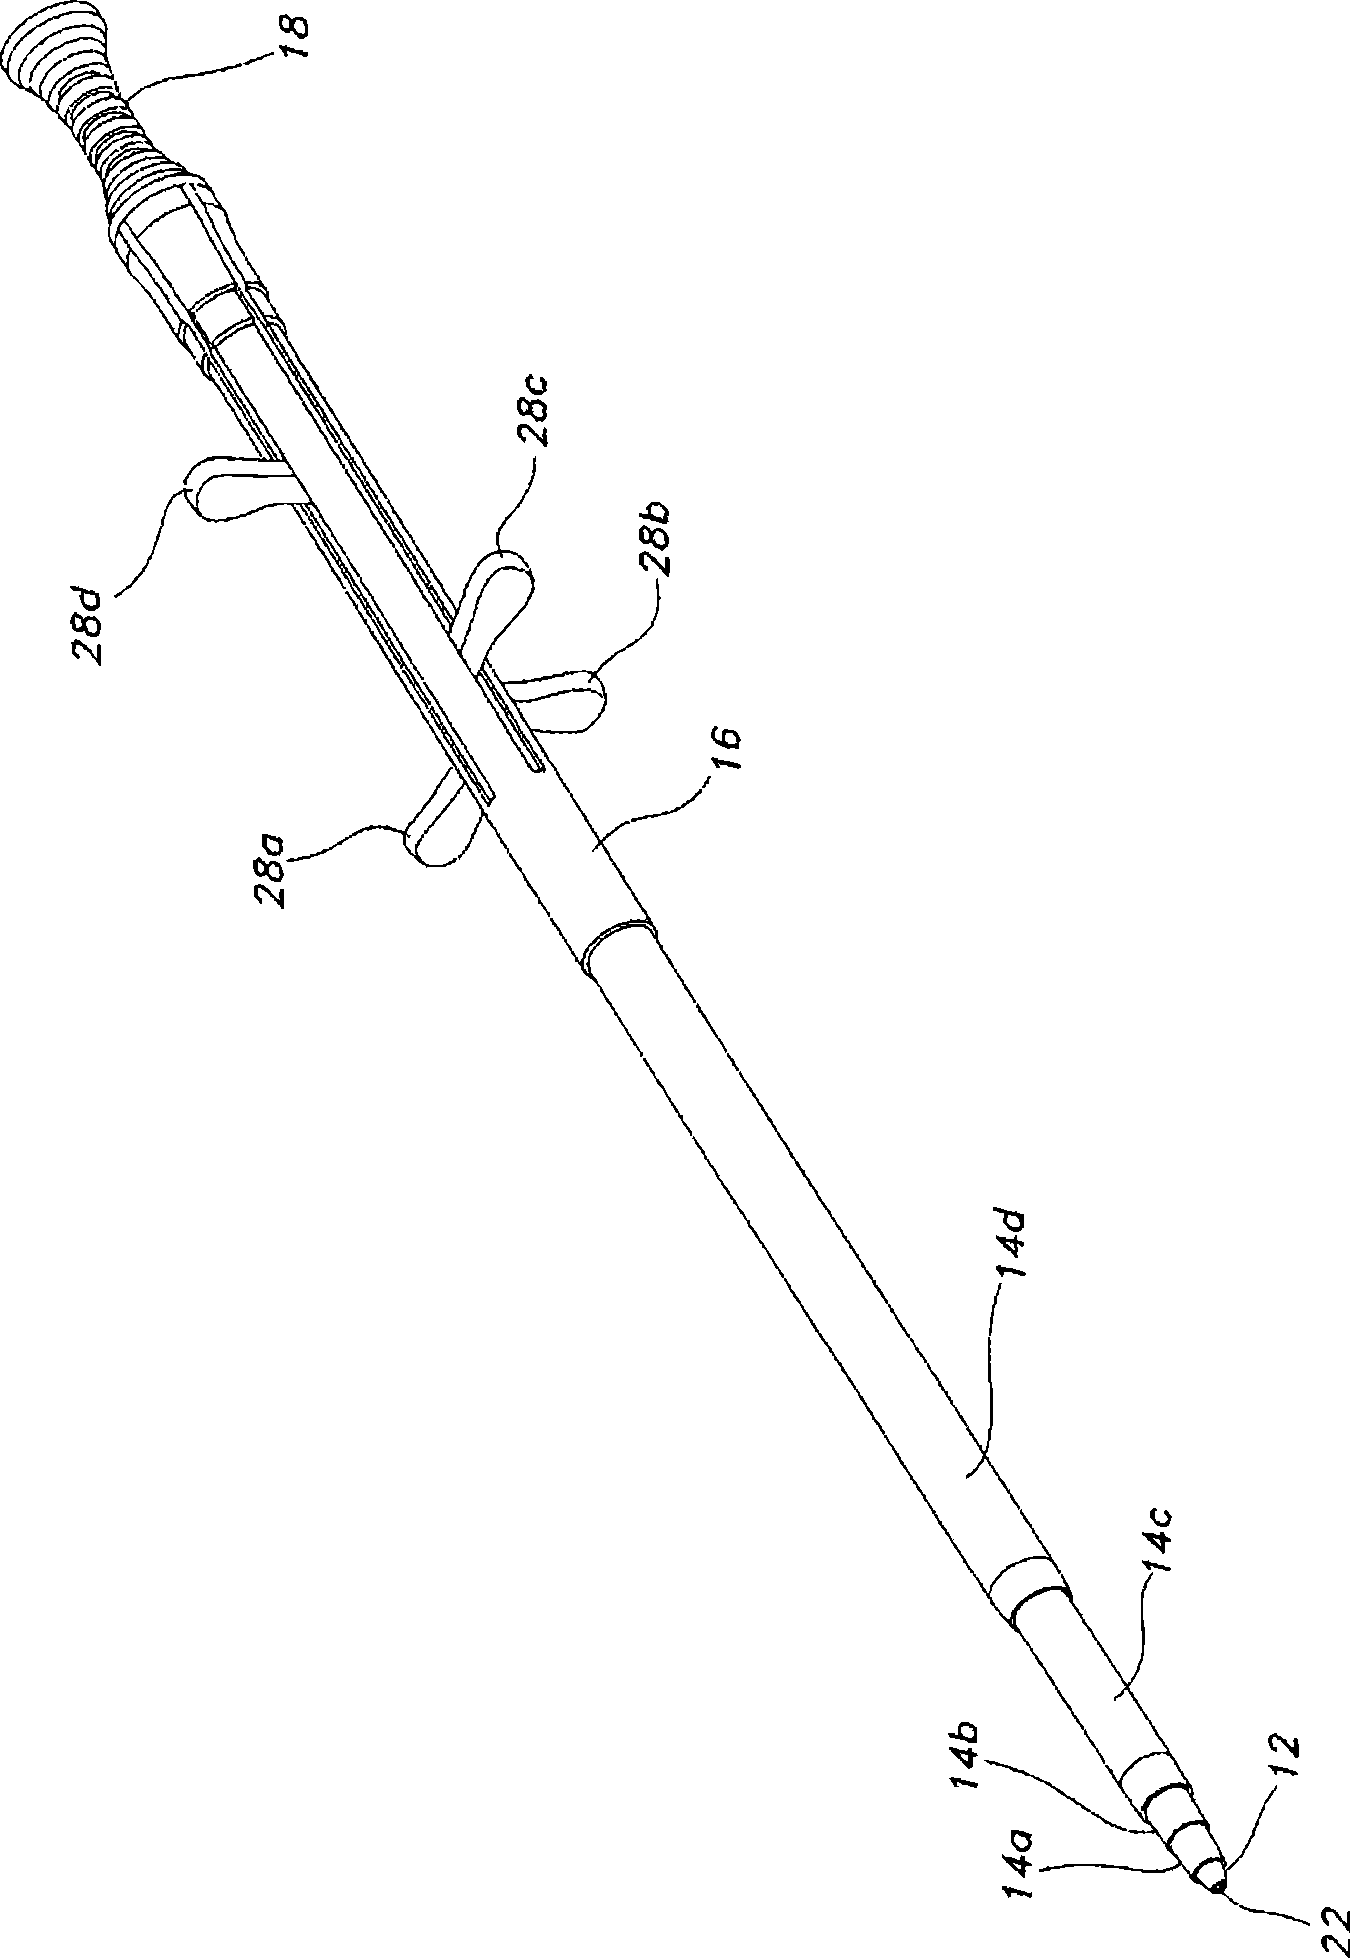 Percutaneous dilation apparatus